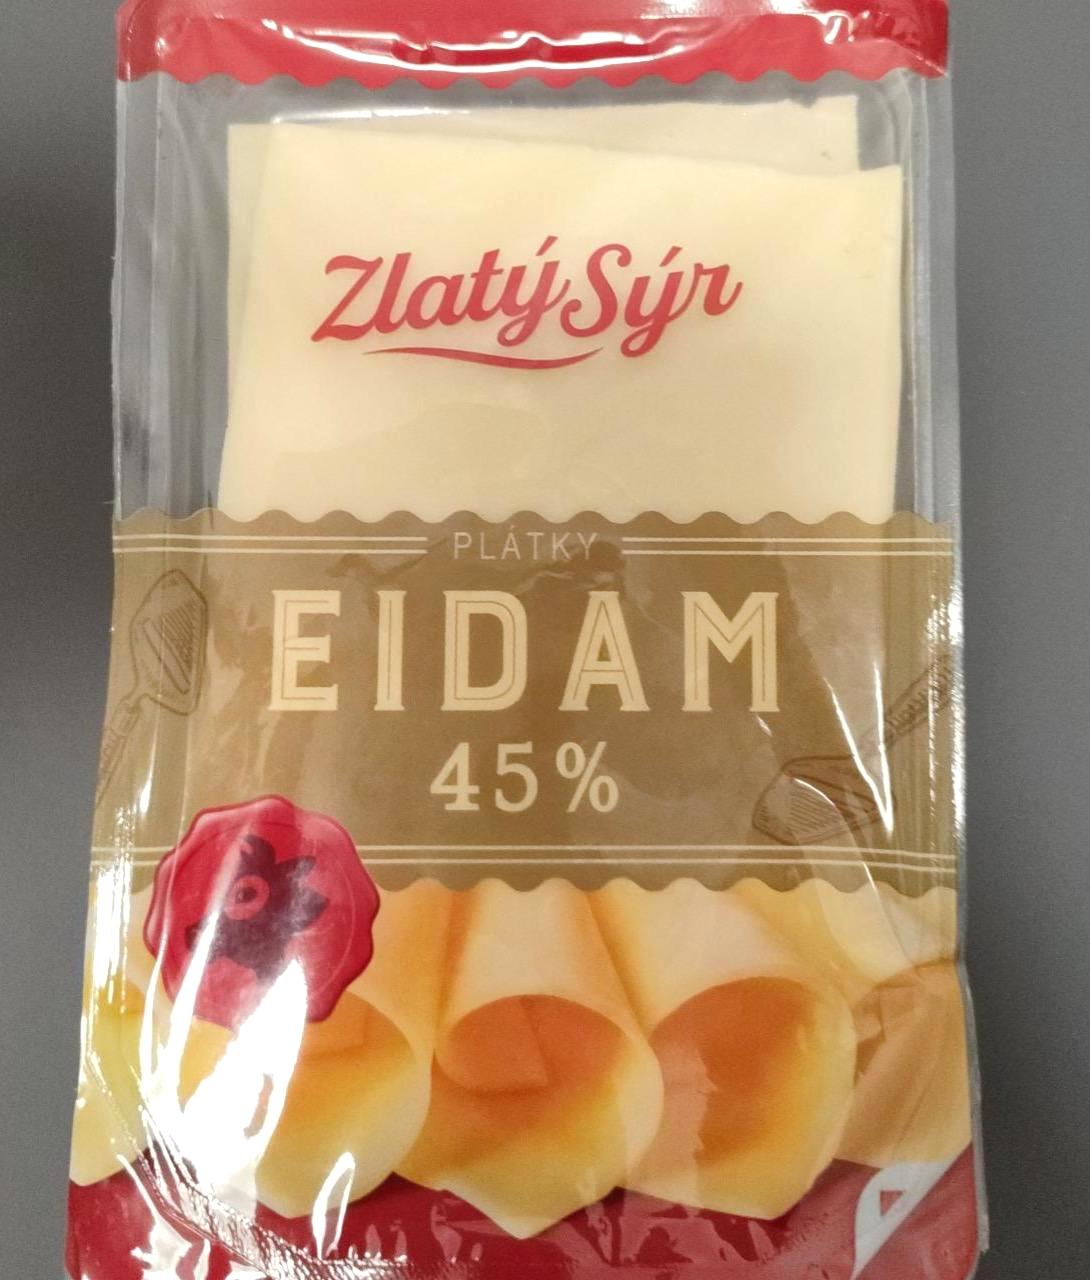 Képek - Eidam sajt 45% Zlatý sýr